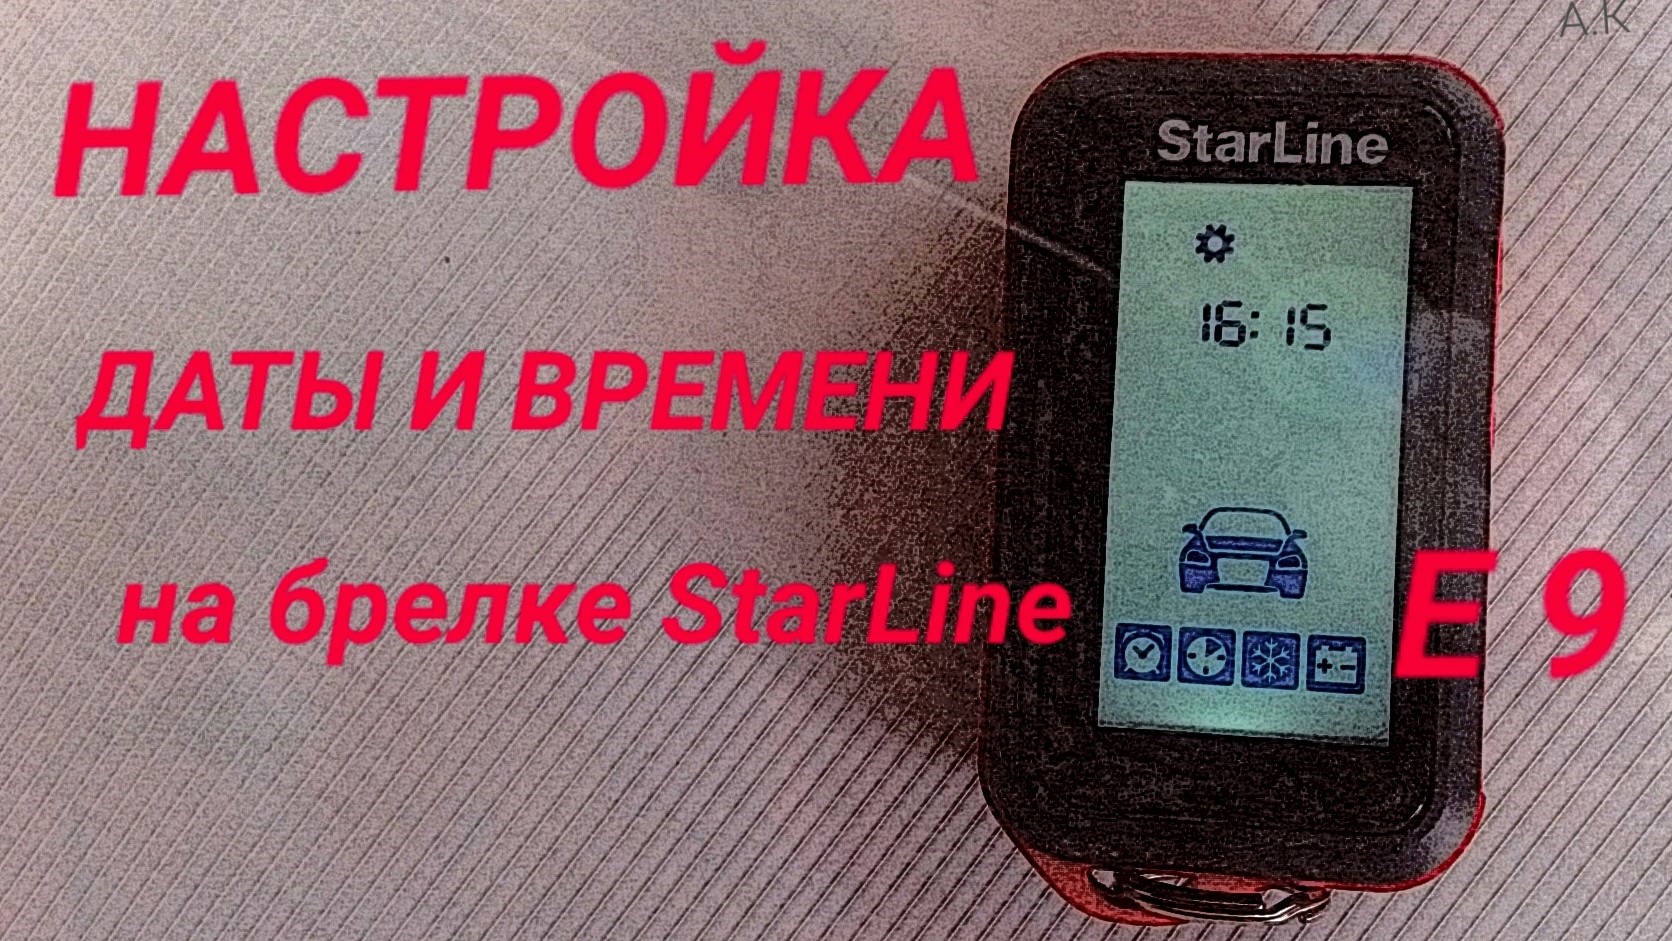 Как установить часы на старлайн. STARLINE e96 v2 брелок. Брелок сигнализации старлайн е 96. STARLINE a96 v2 брелок. Брелок сигнализации STARLINE е96.